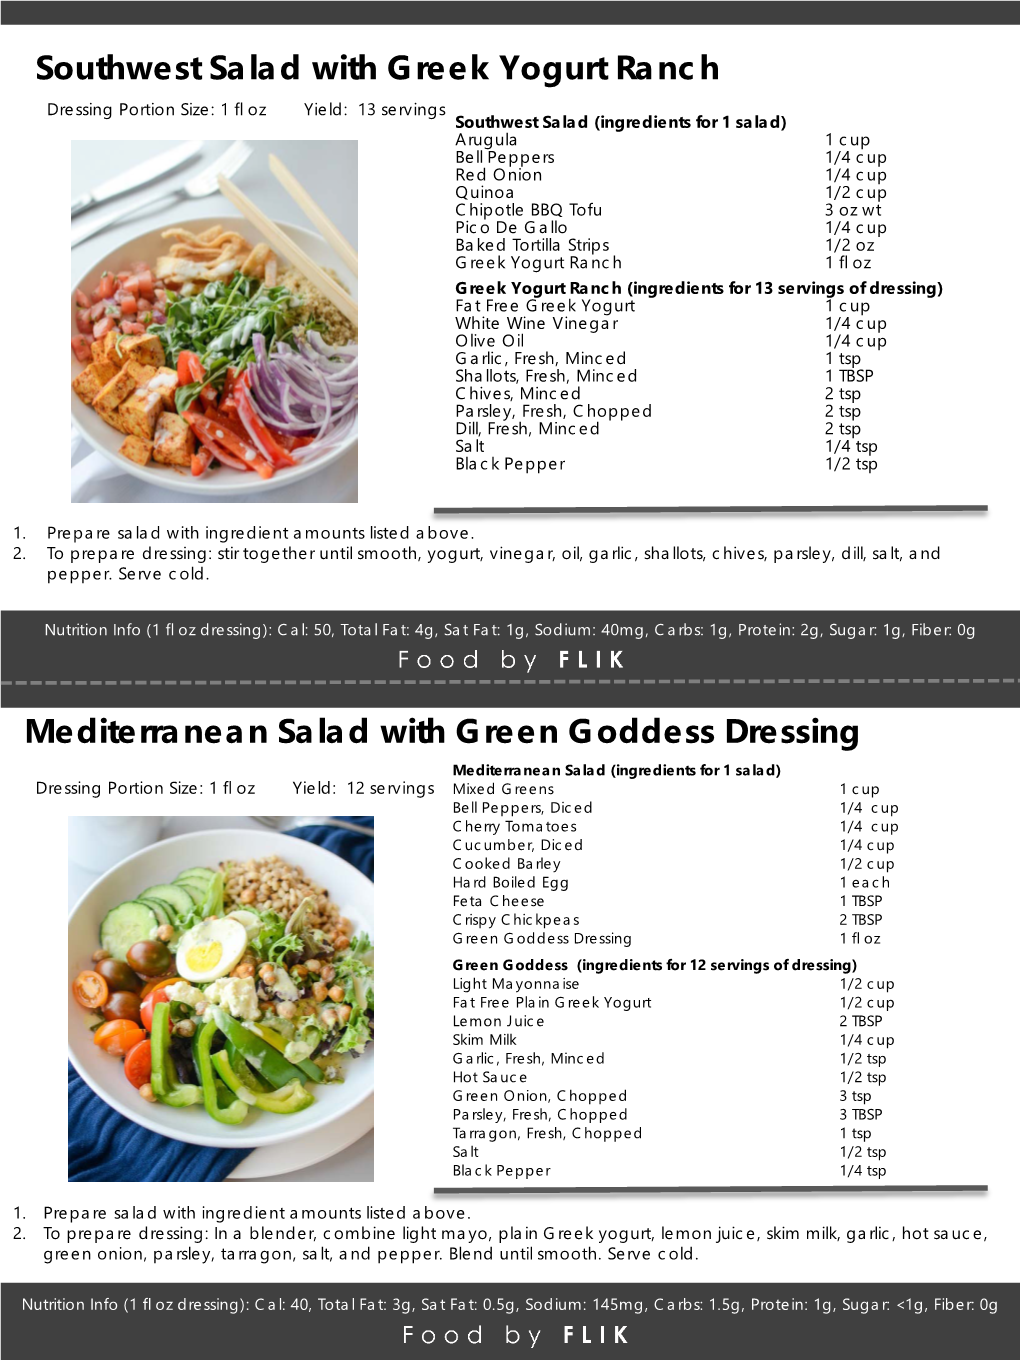 Southwest Salad with Greek Yogurt Ranch Mediterranean Salad with Green Goddess Dressing